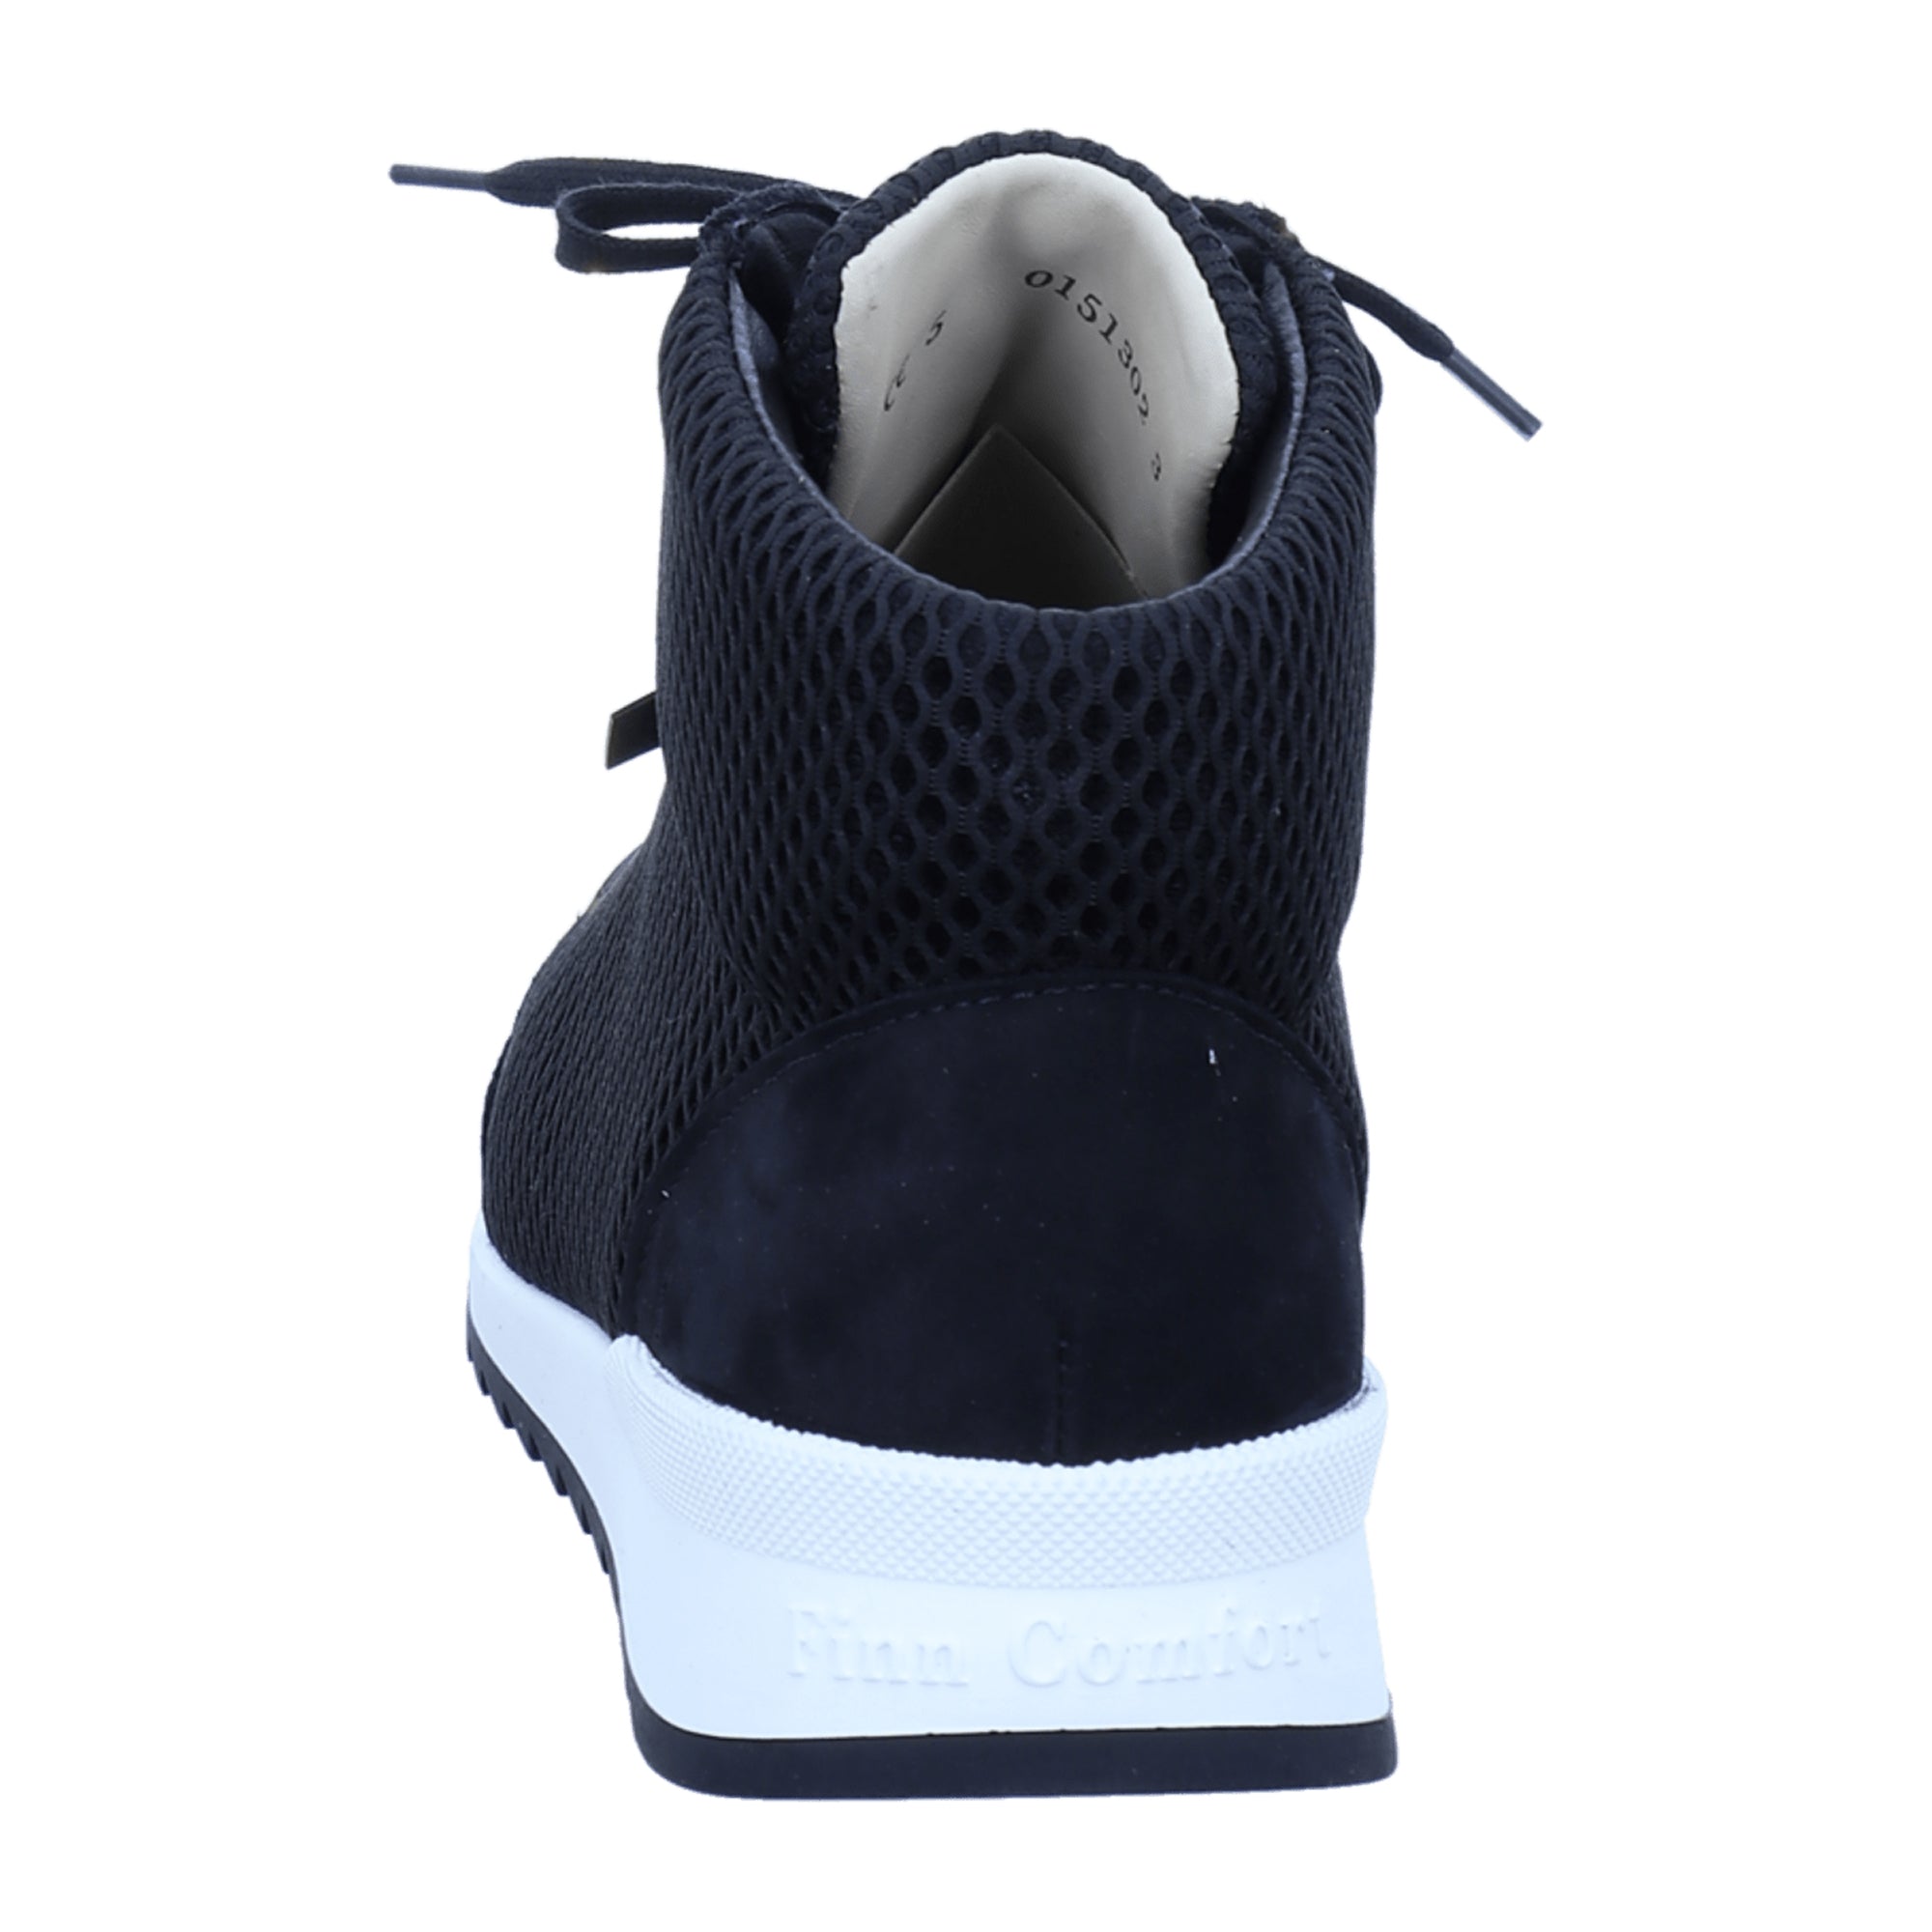 Finn Comfort Linares Women's Black Comfort Shoes - Stylish & Durable